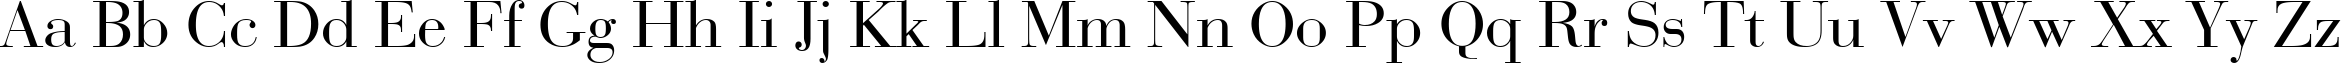 Пример написания английского алфавита шрифтом Bedini